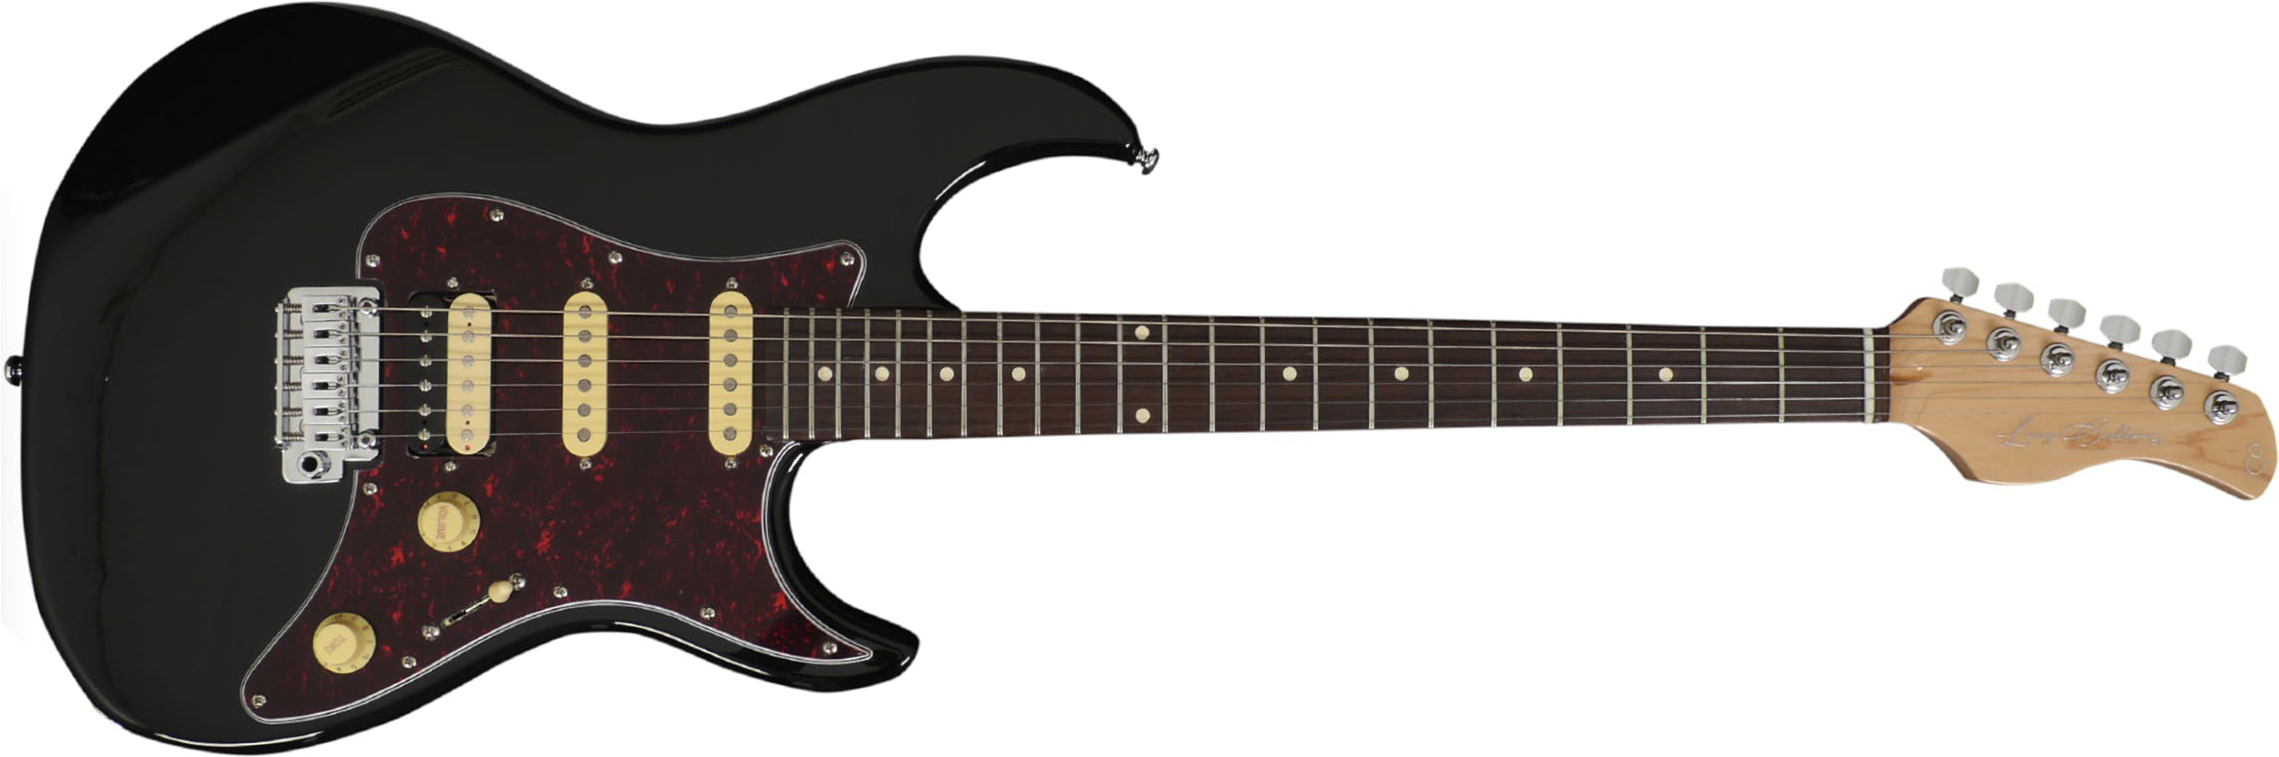 Sire Larry Carlton S3 Signature Hss Trem Rw - Black - Str shape electric guitar - Main picture